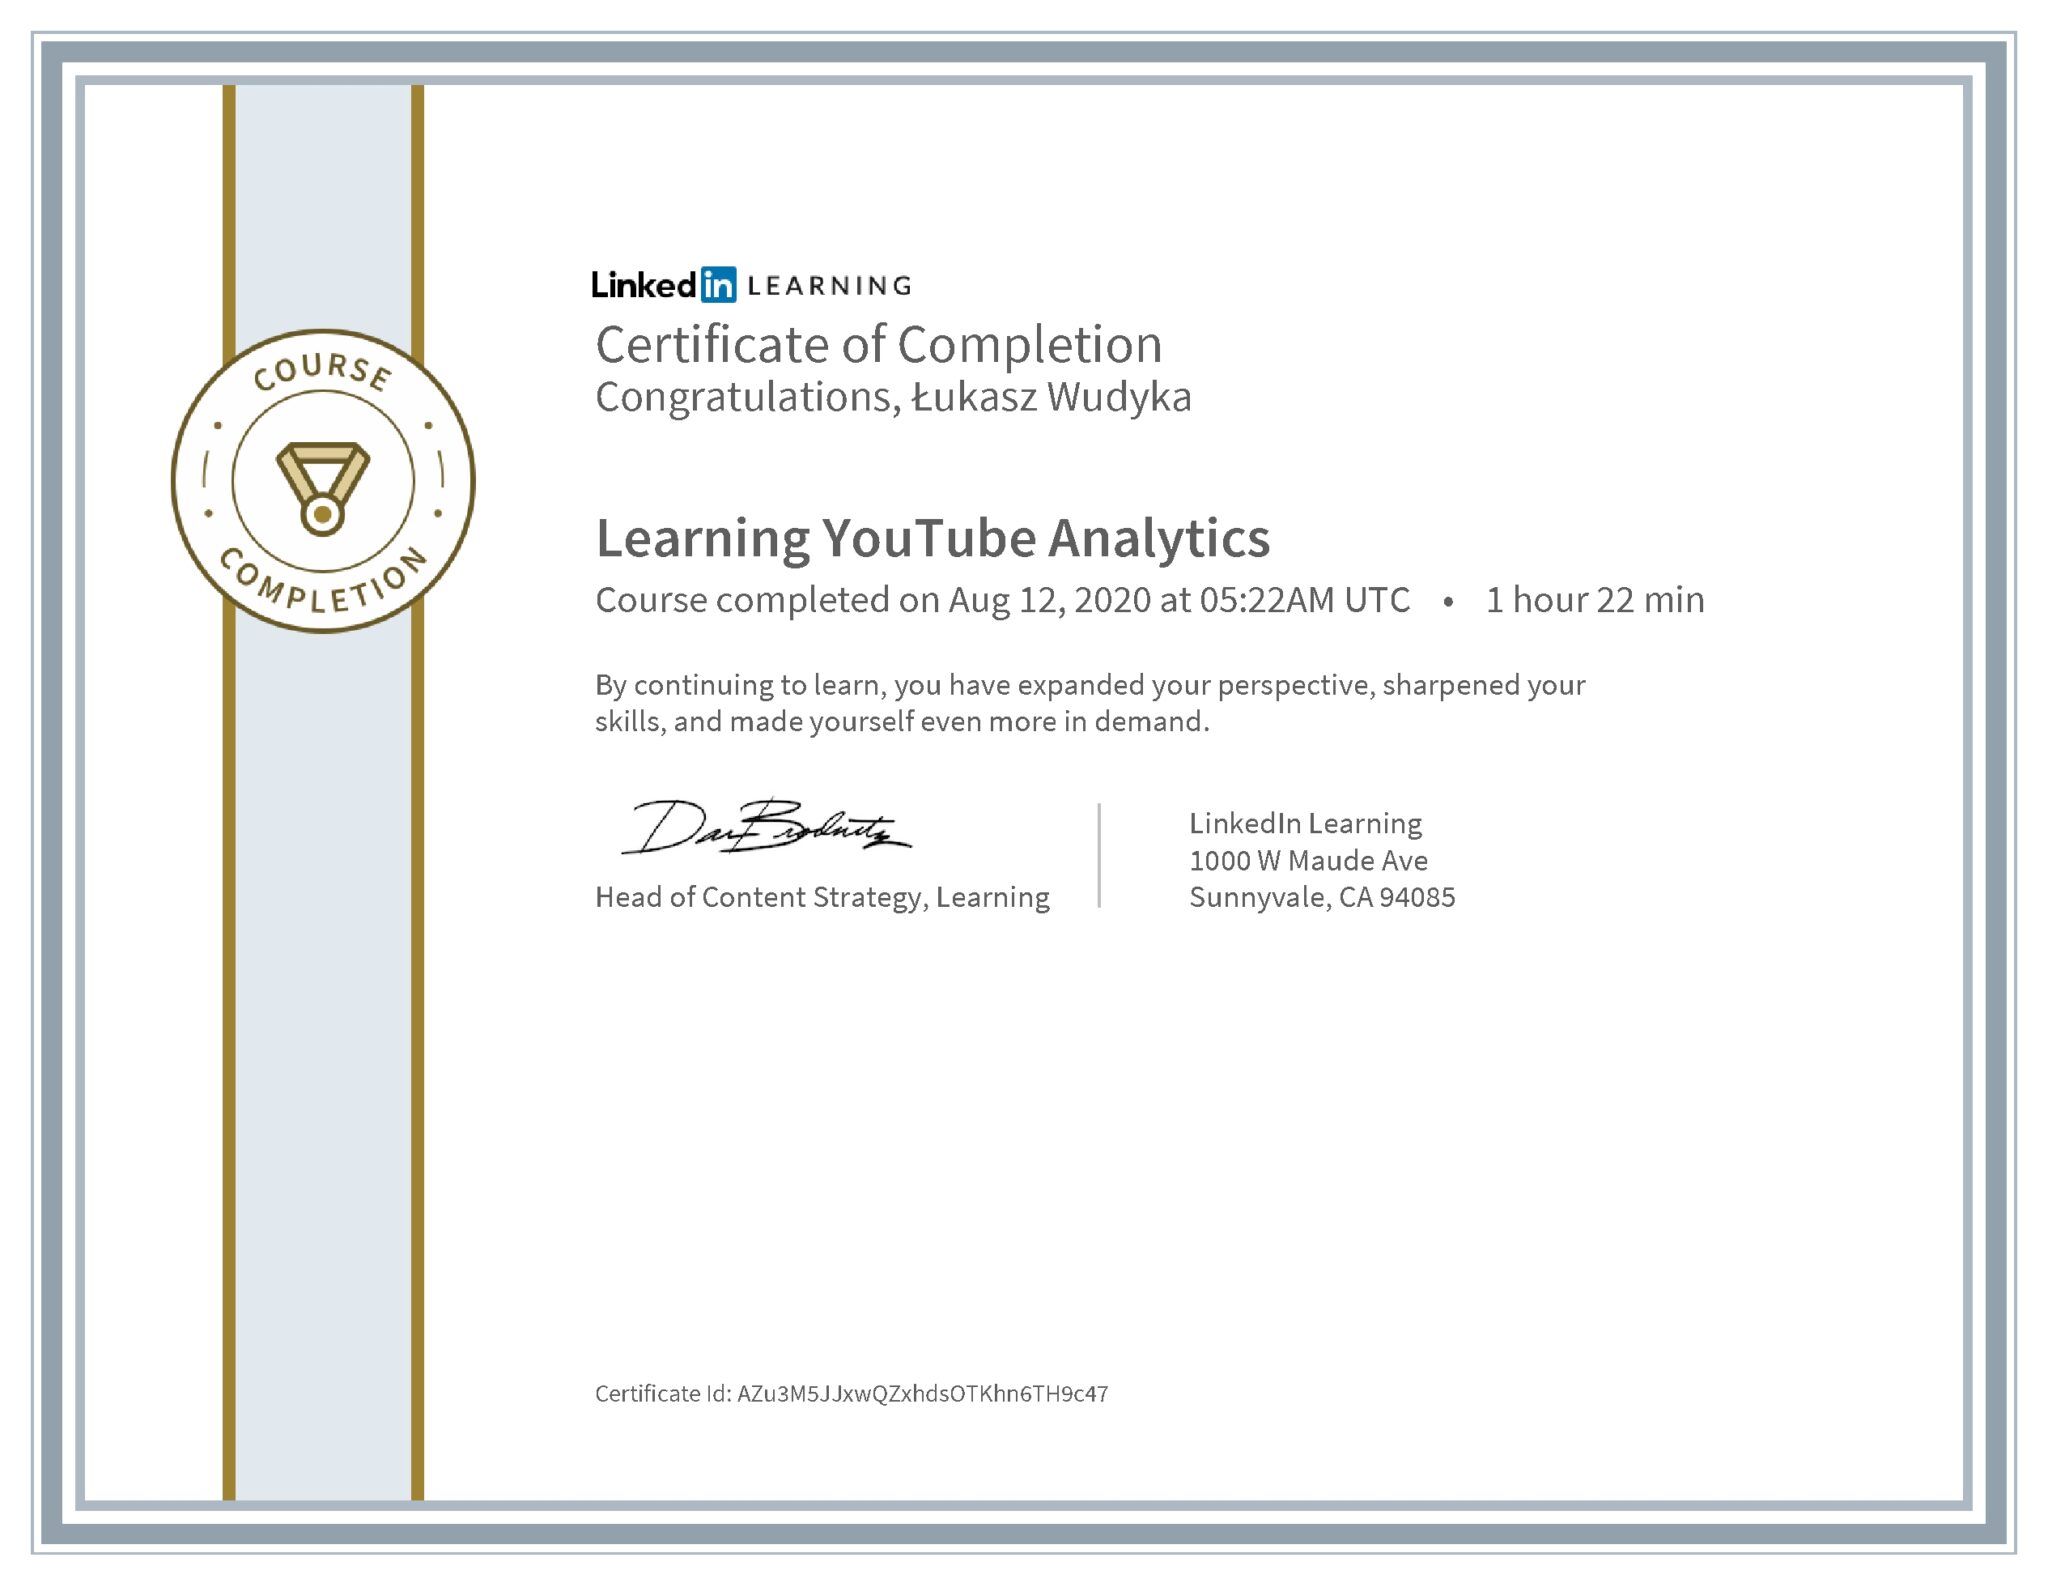 Łukasz Wudyka certyfikat LinkedIn Learning YouTube Analytics